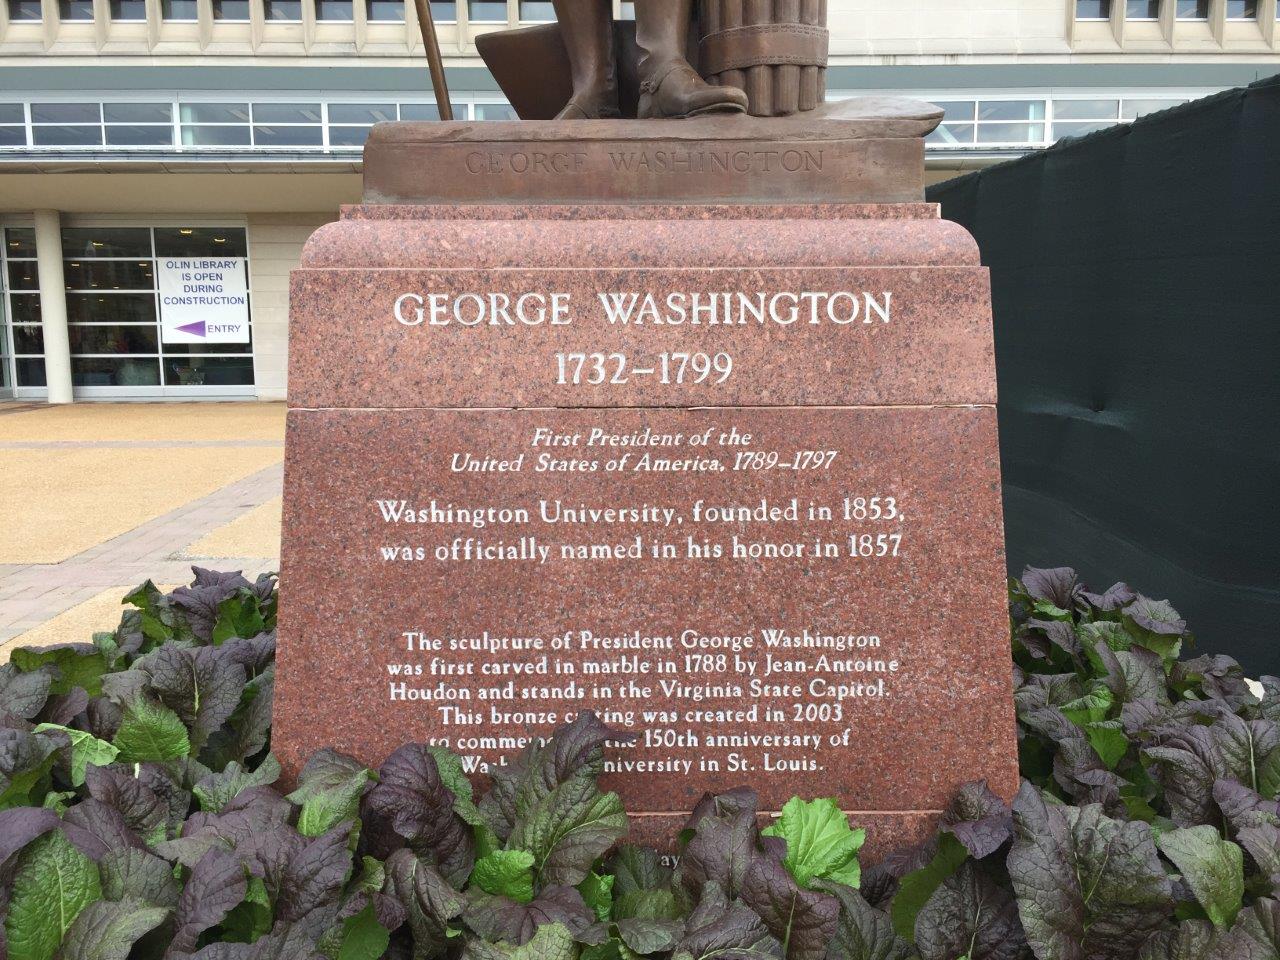 George Washington statue at Washington University in St. Louis